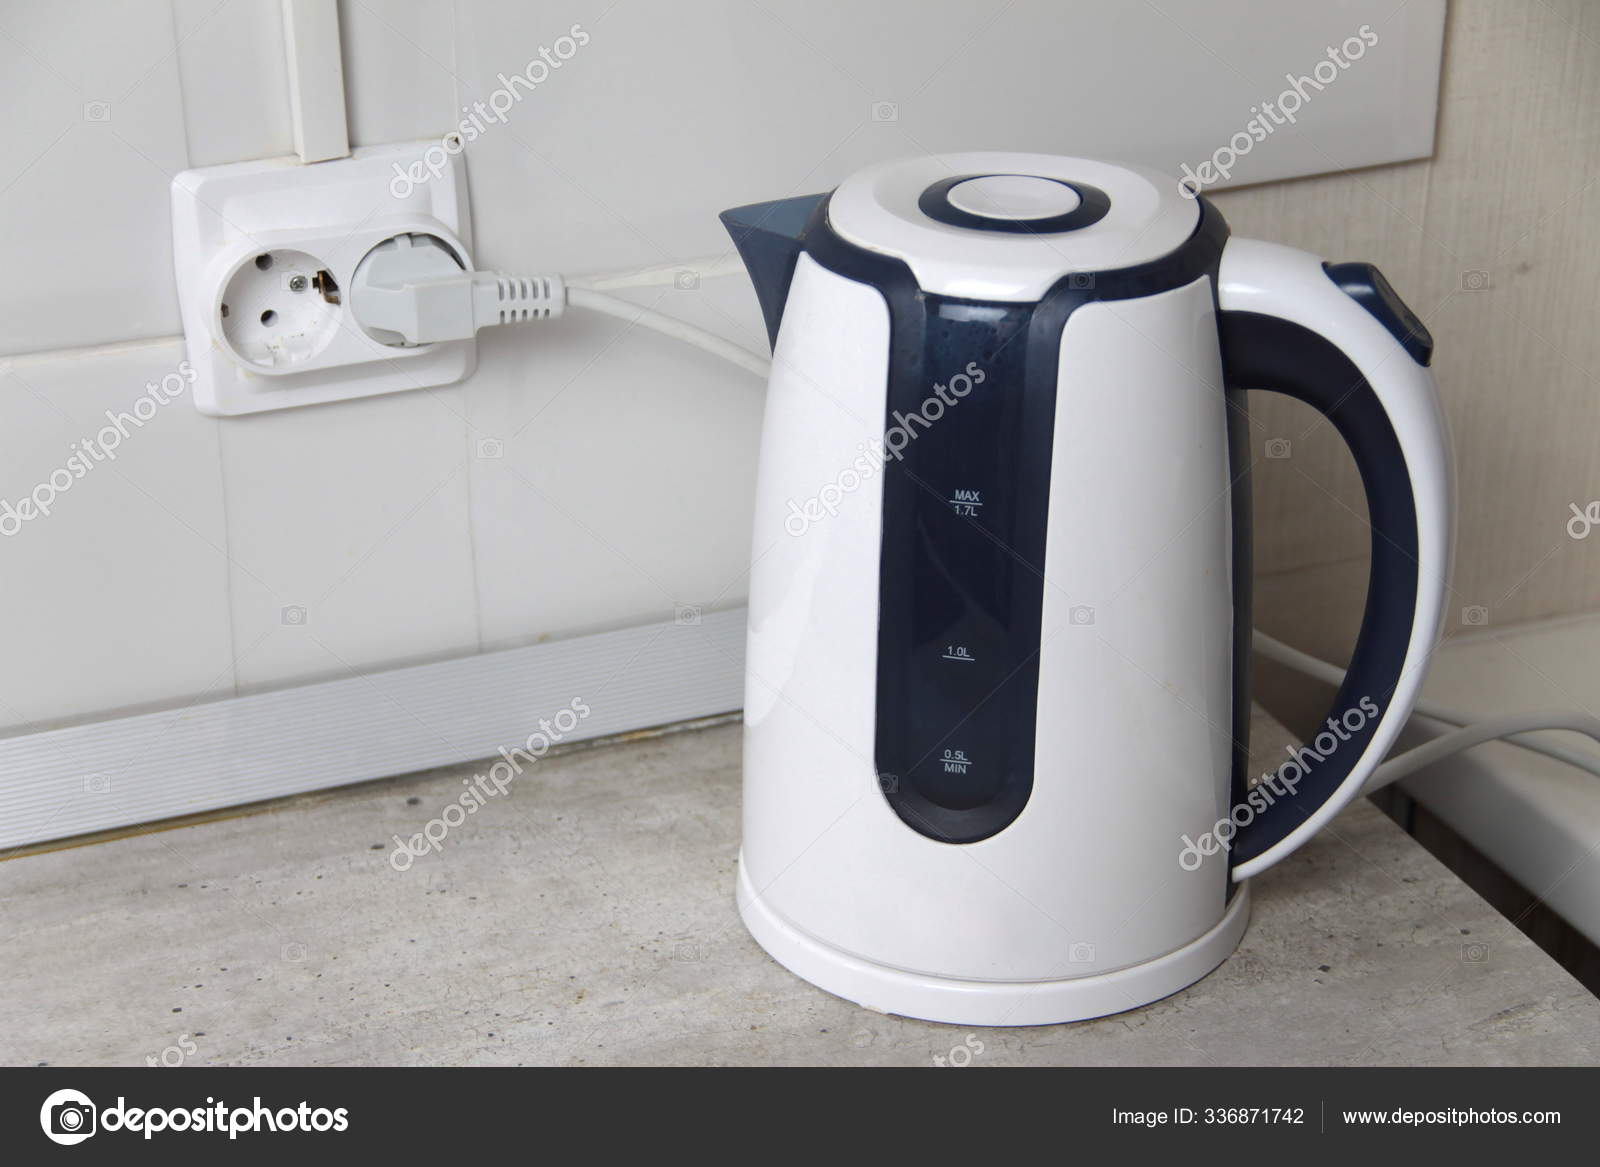 https://st3.depositphotos.com/31324280/33687/i/1600/depositphotos_336871742-stock-photo-white-electric-kettle-stands-on.jpg